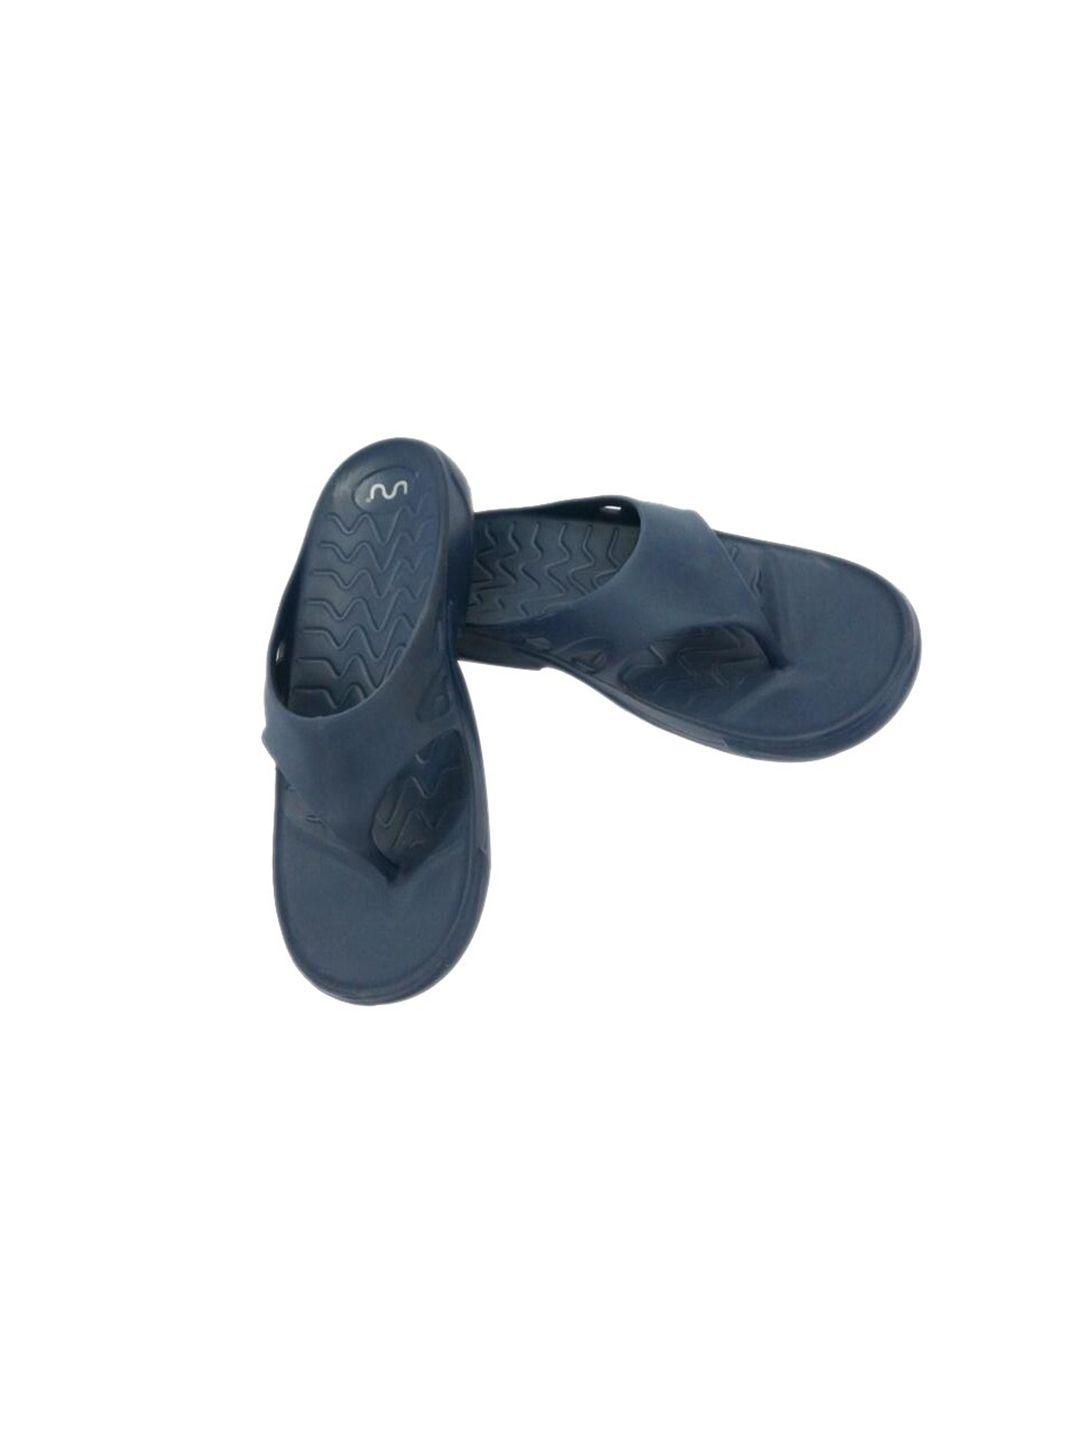 doubleu men comfortable rubber thong flip-flops